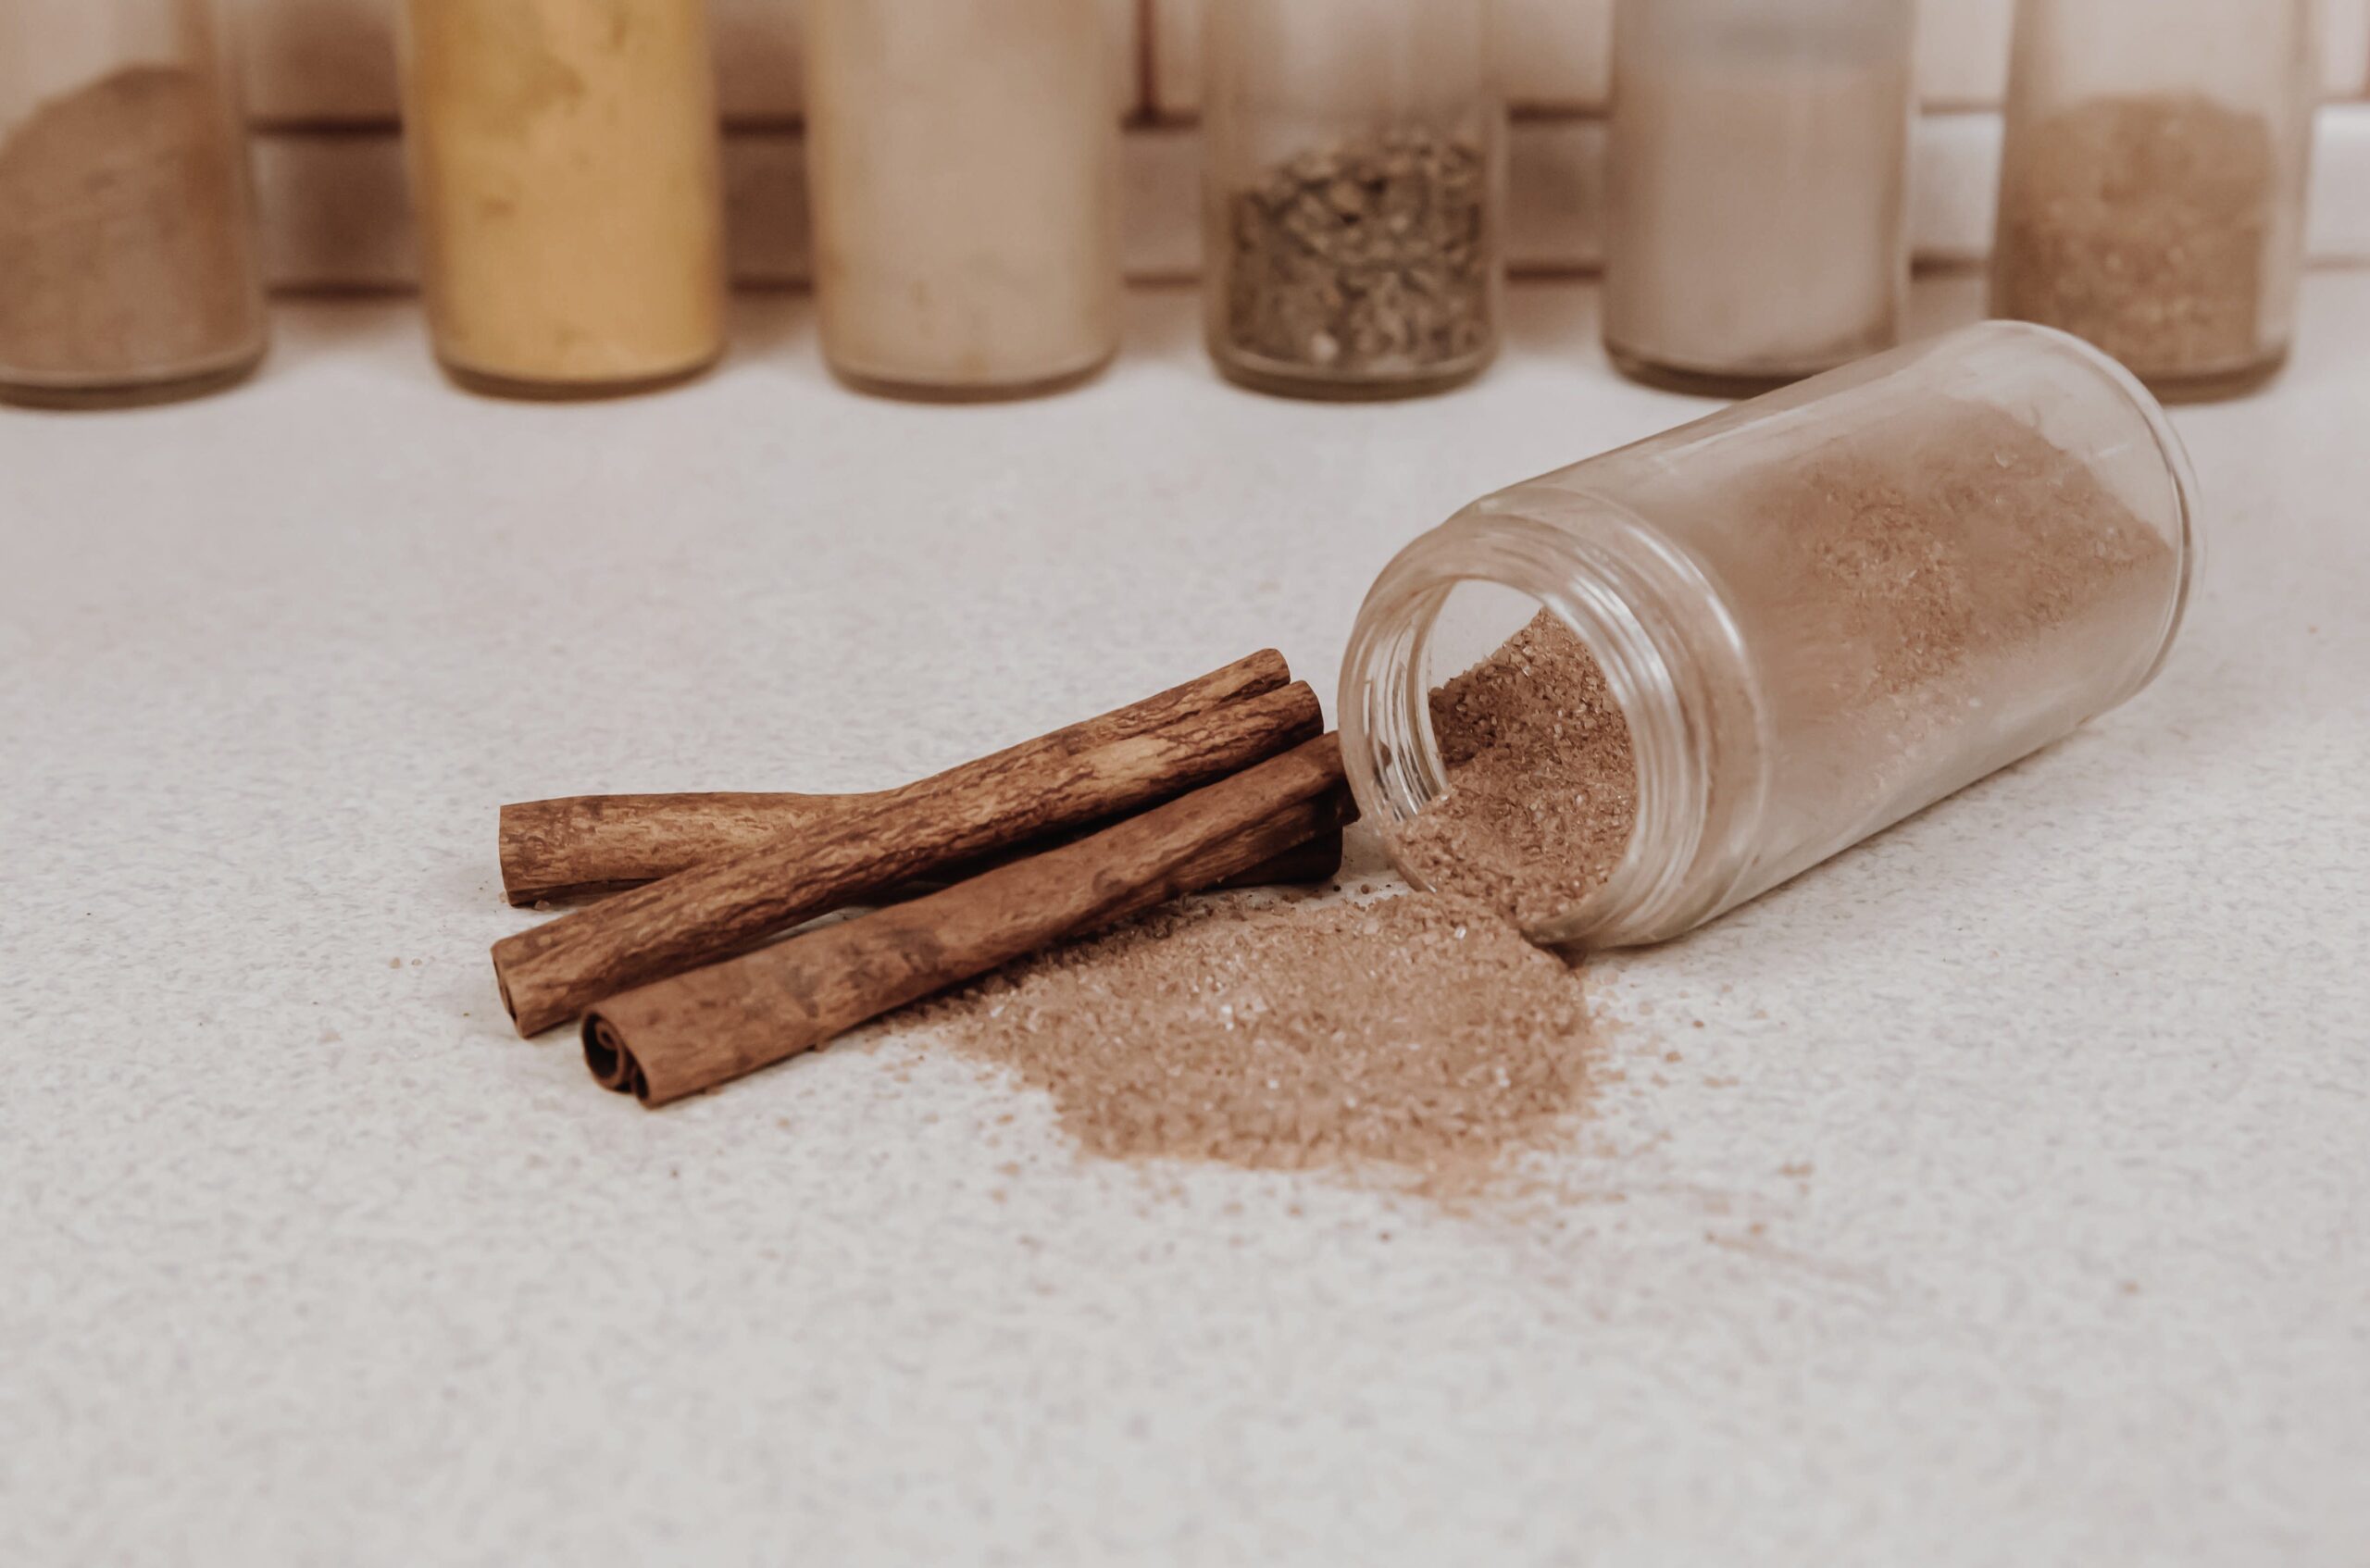 Cinnamon sticks next to powdered form on white table